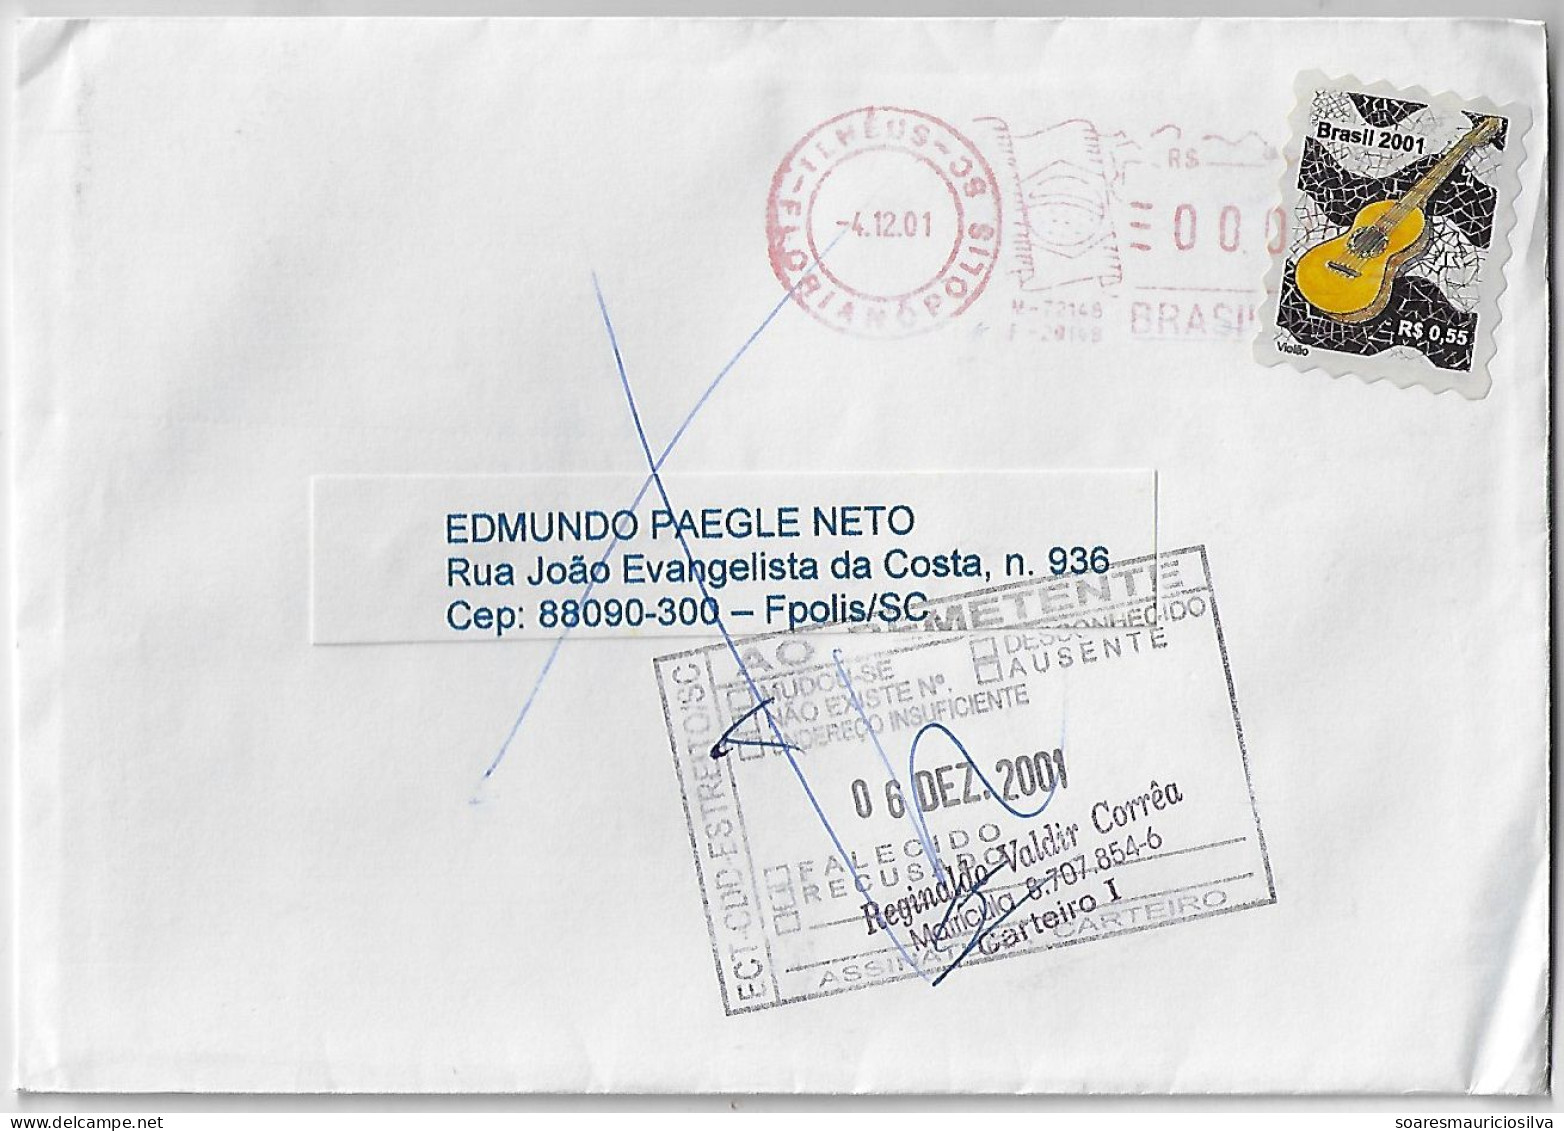 Brazil 2001 Returned Cover Florianópolis Ilhéus Agency Stamp Musical Instrument Guitar Canceled By Meter Stamp Zeo Value - Briefe U. Dokumente